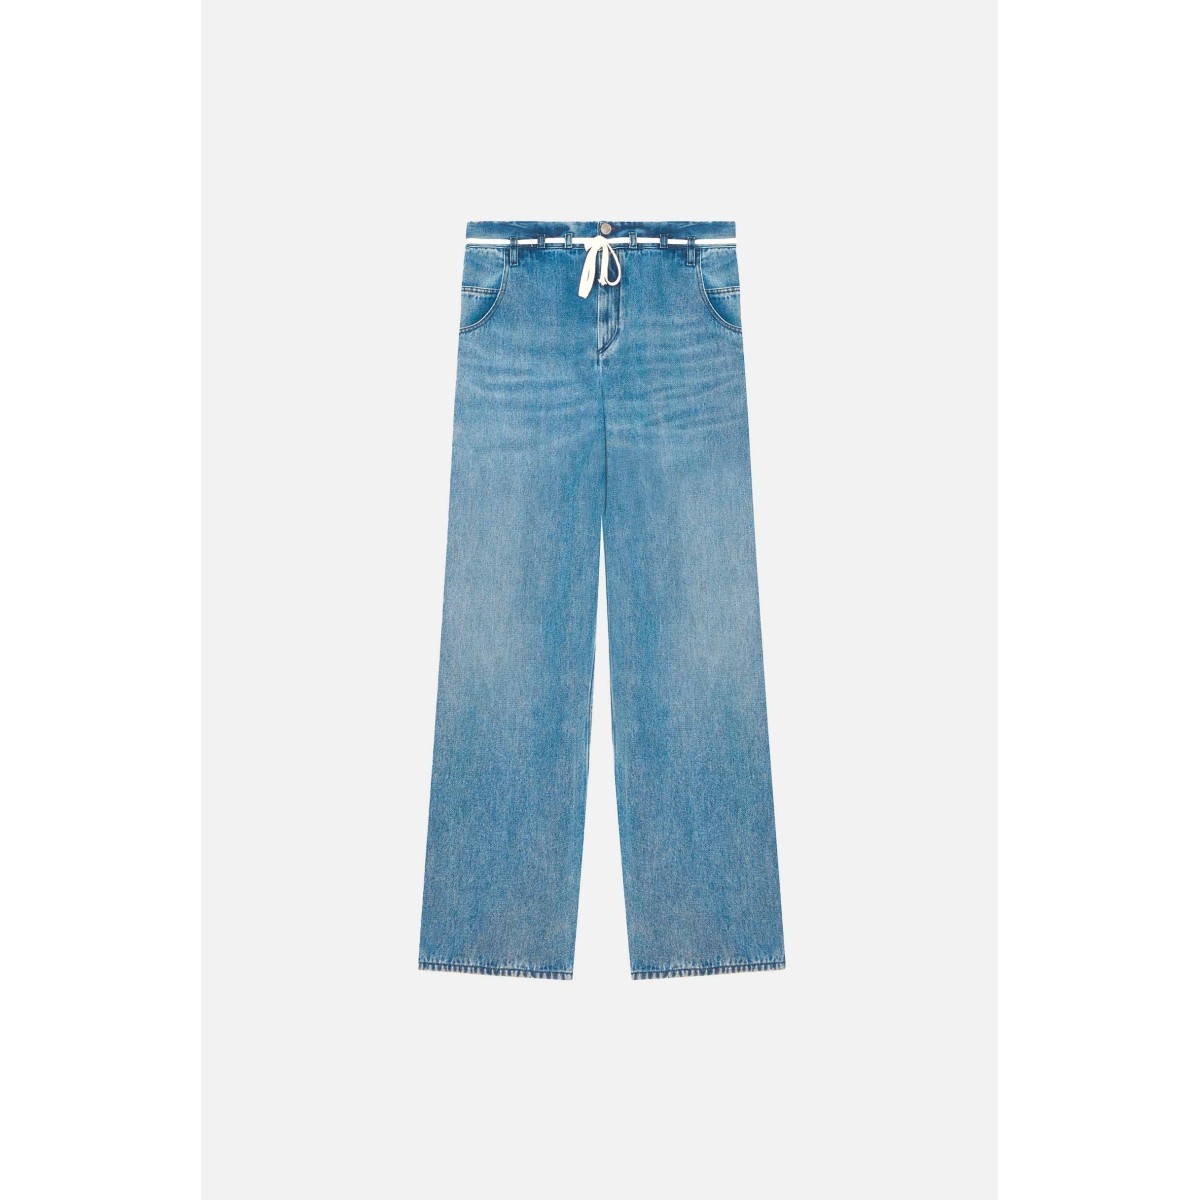 Jordy" oversized jeans Isabel Marant